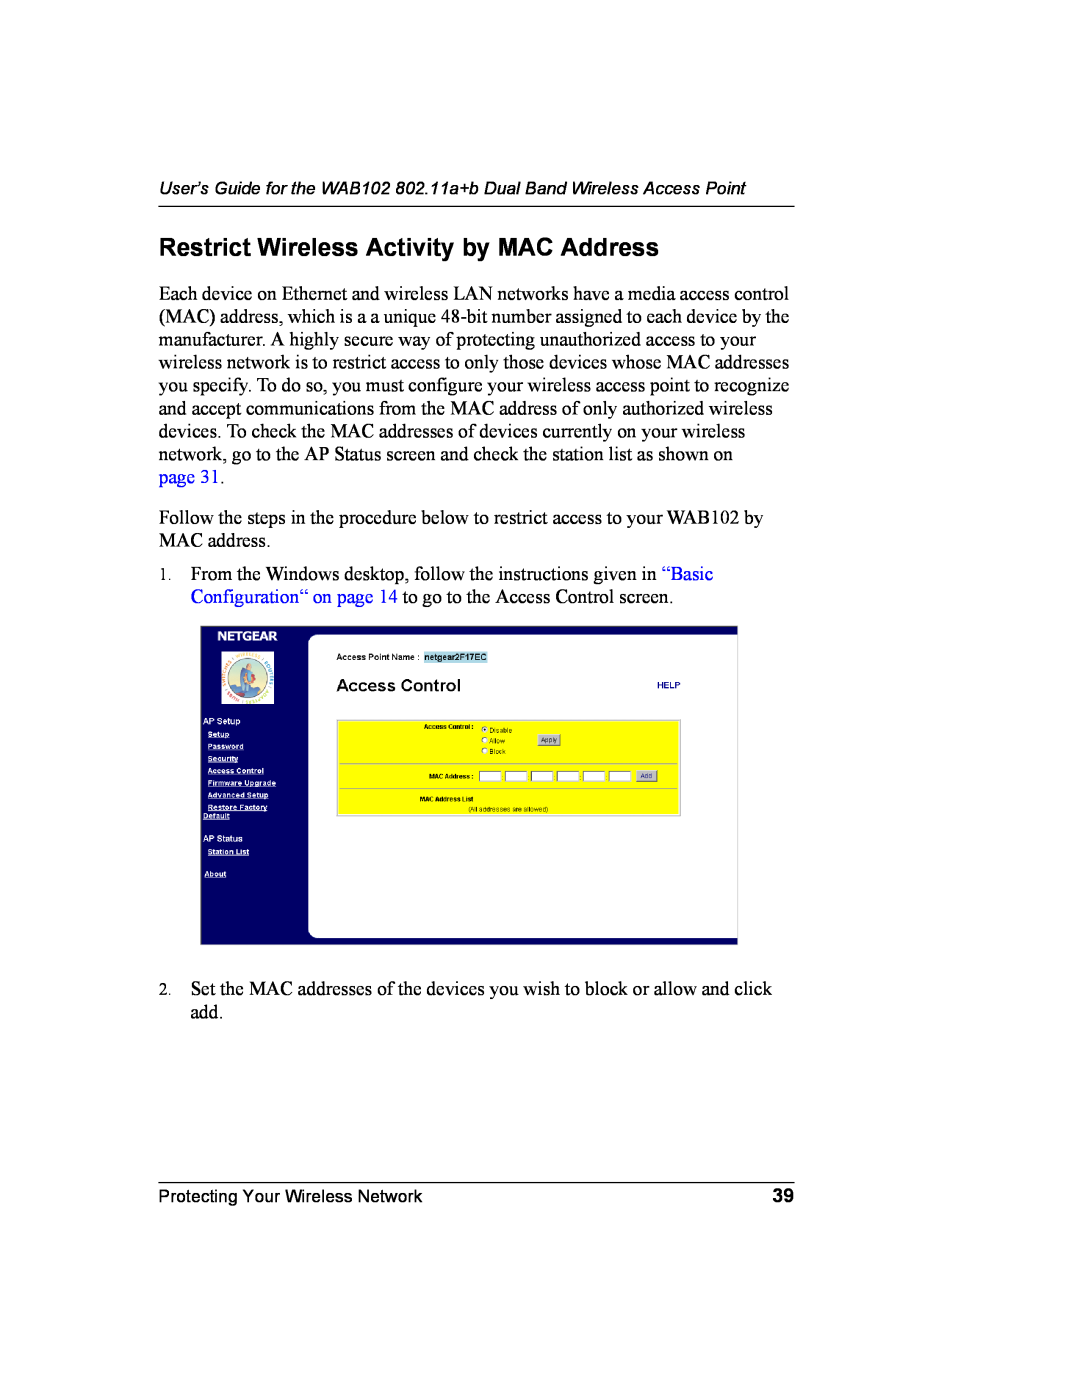 NETGEAR WAB102 manual Restrict Wireless Activity by MAC Address 